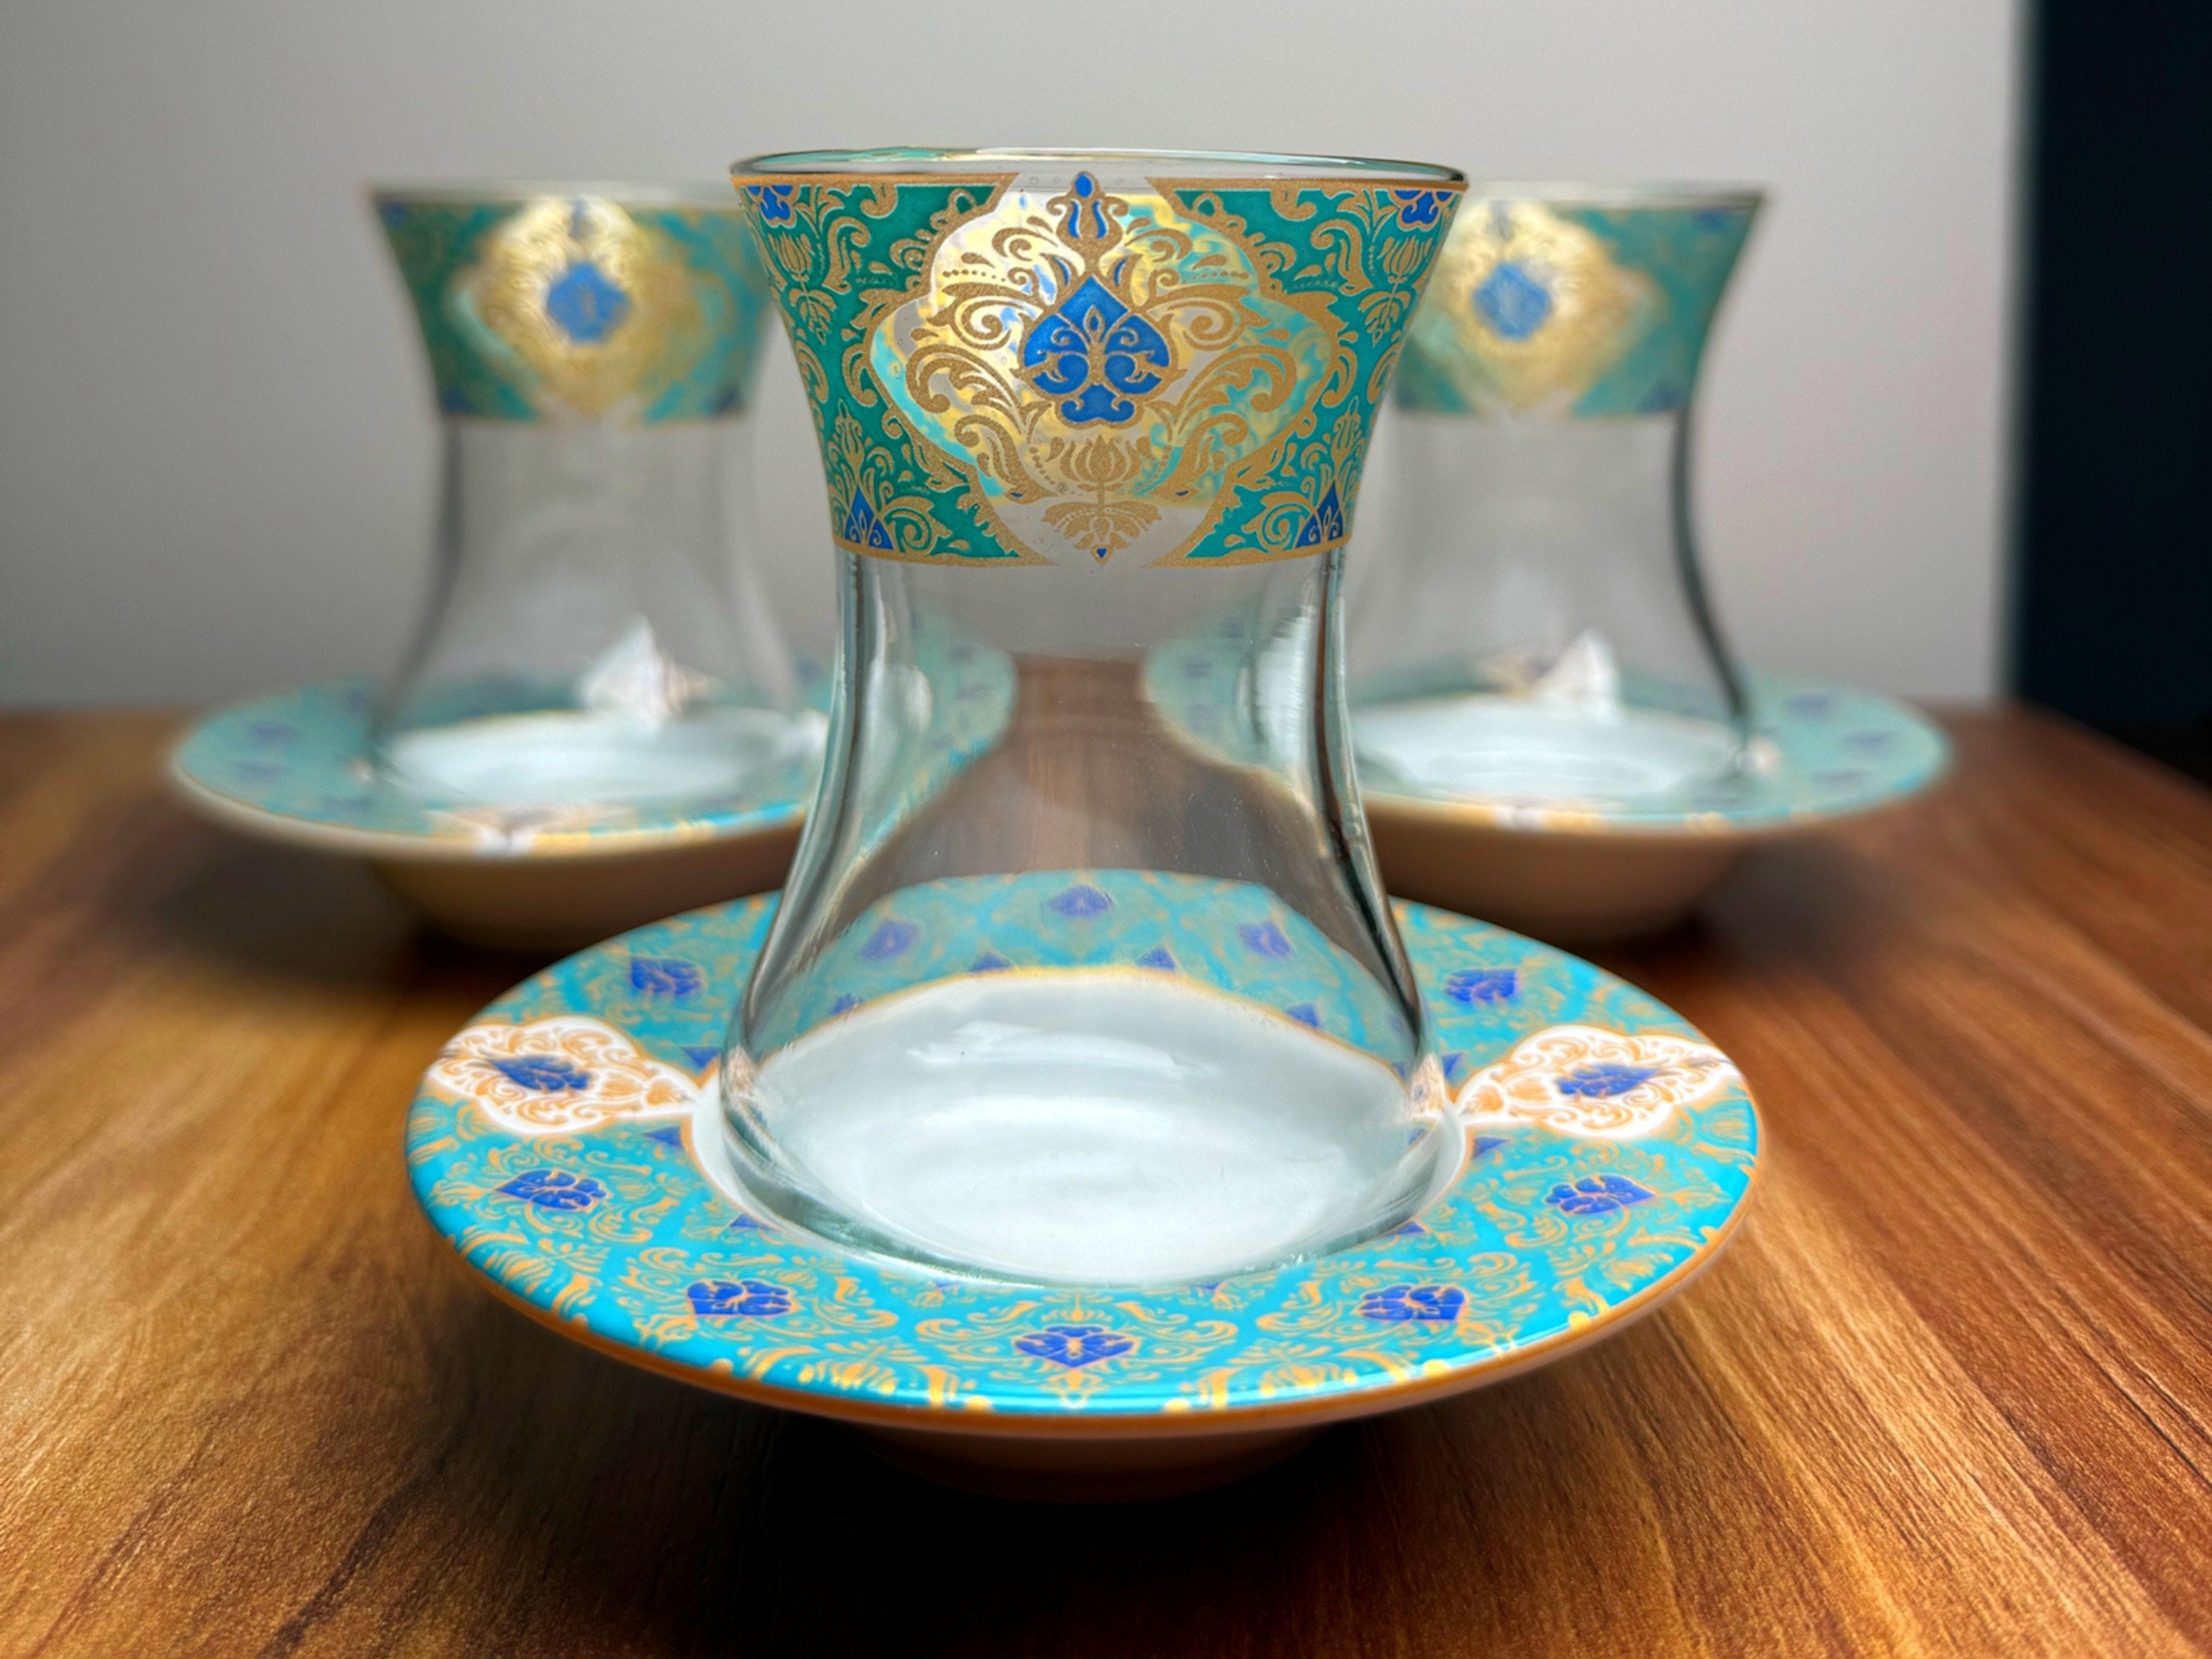 Pasabahce Aida Large Turkish Tea Glasses Set - 6 Pack